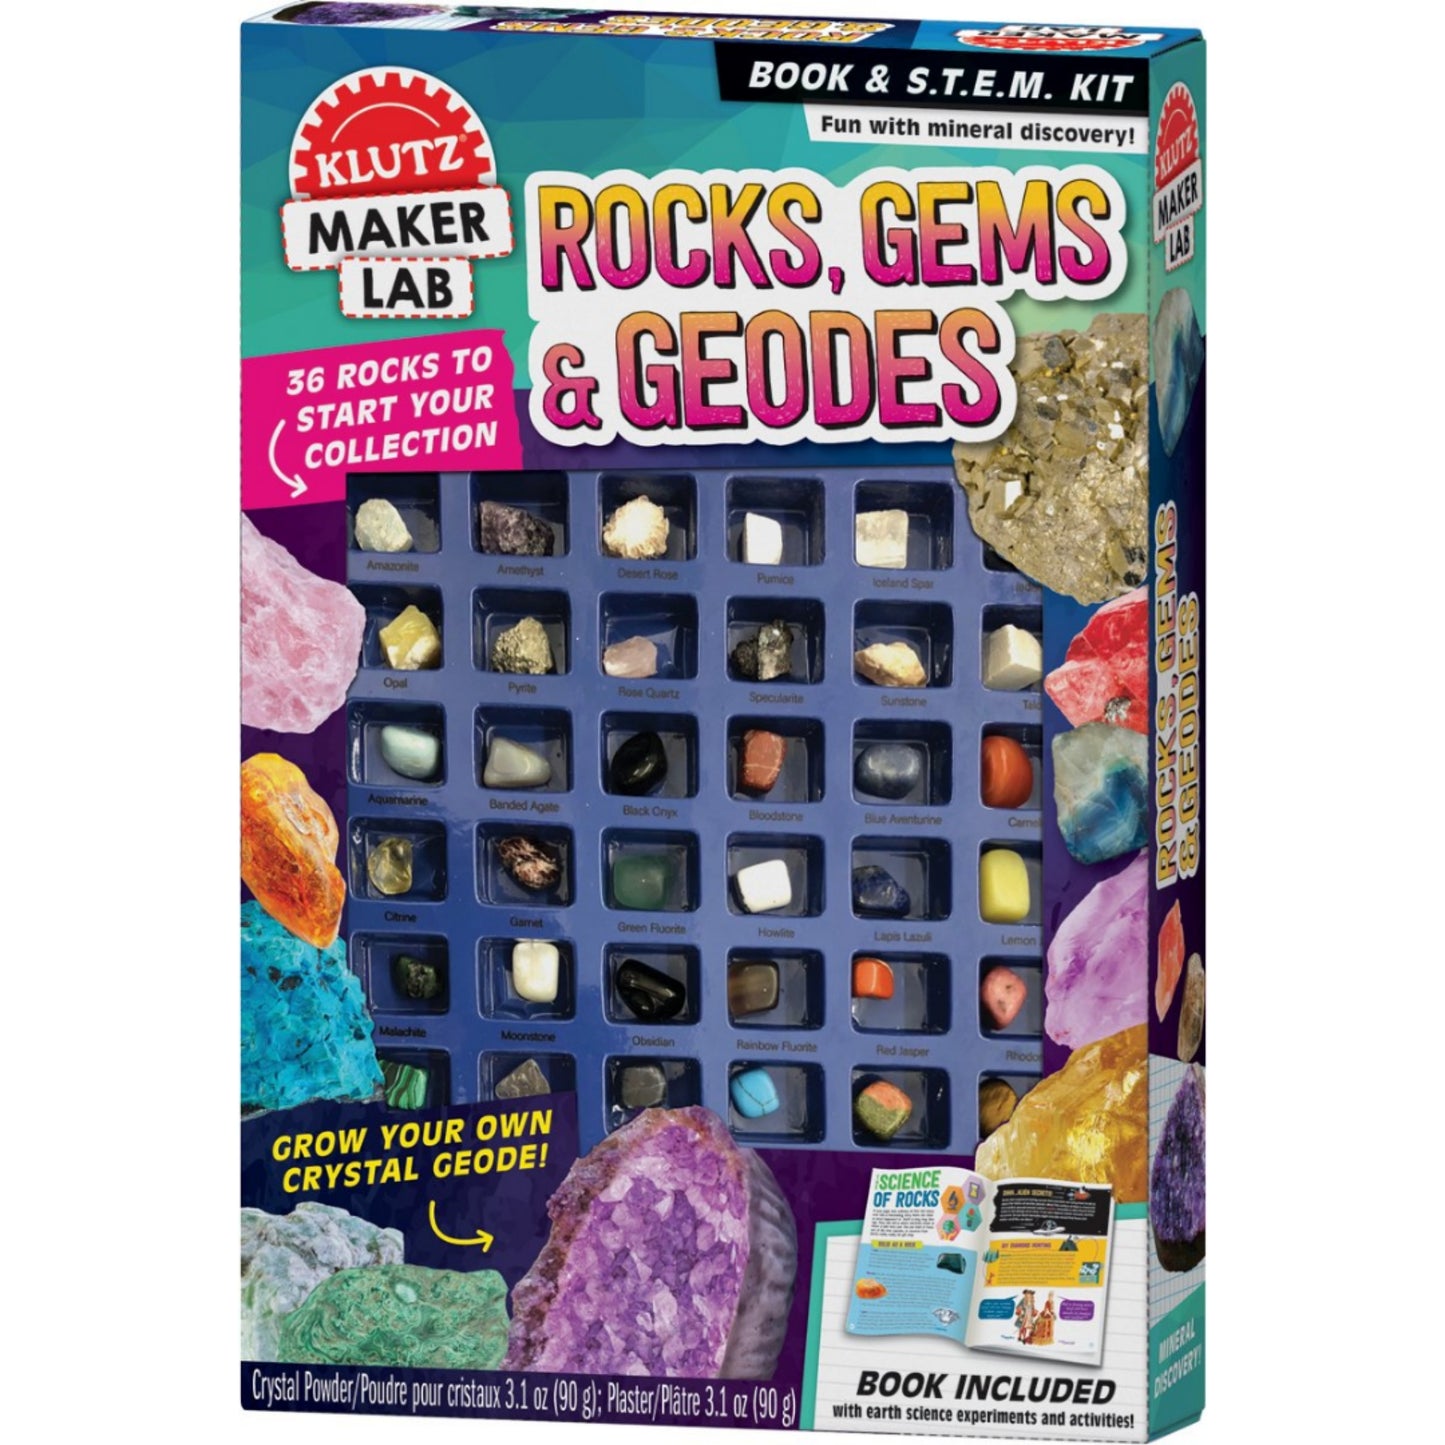 Rocks, Gems & Geodes Maker Lab